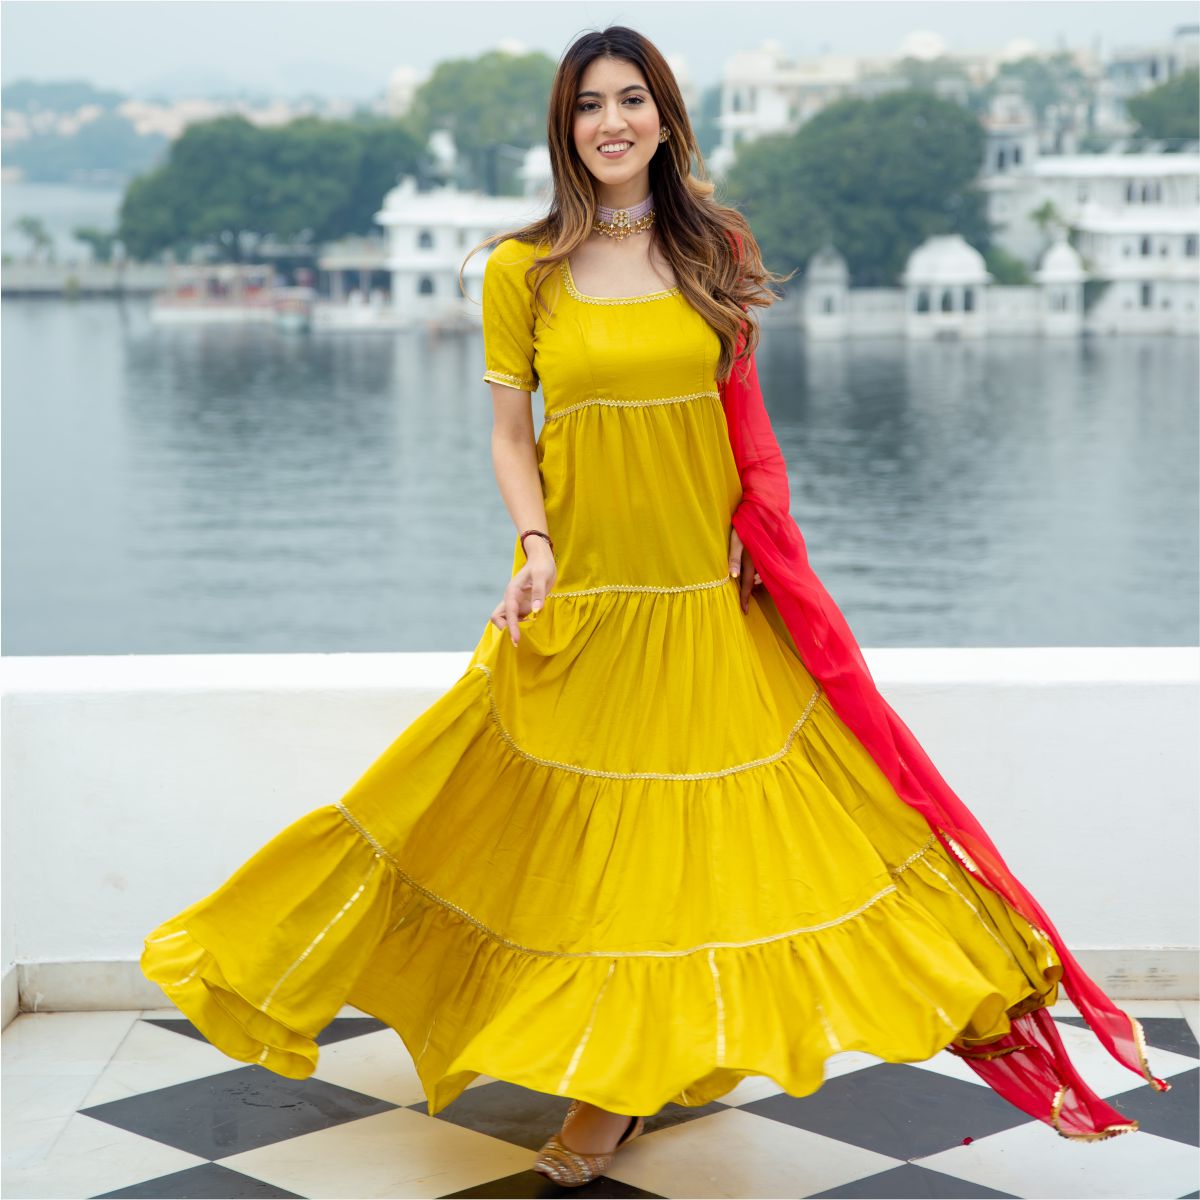 New) Kareena Kapoor Khan Yellow Gown Online Rs.2099